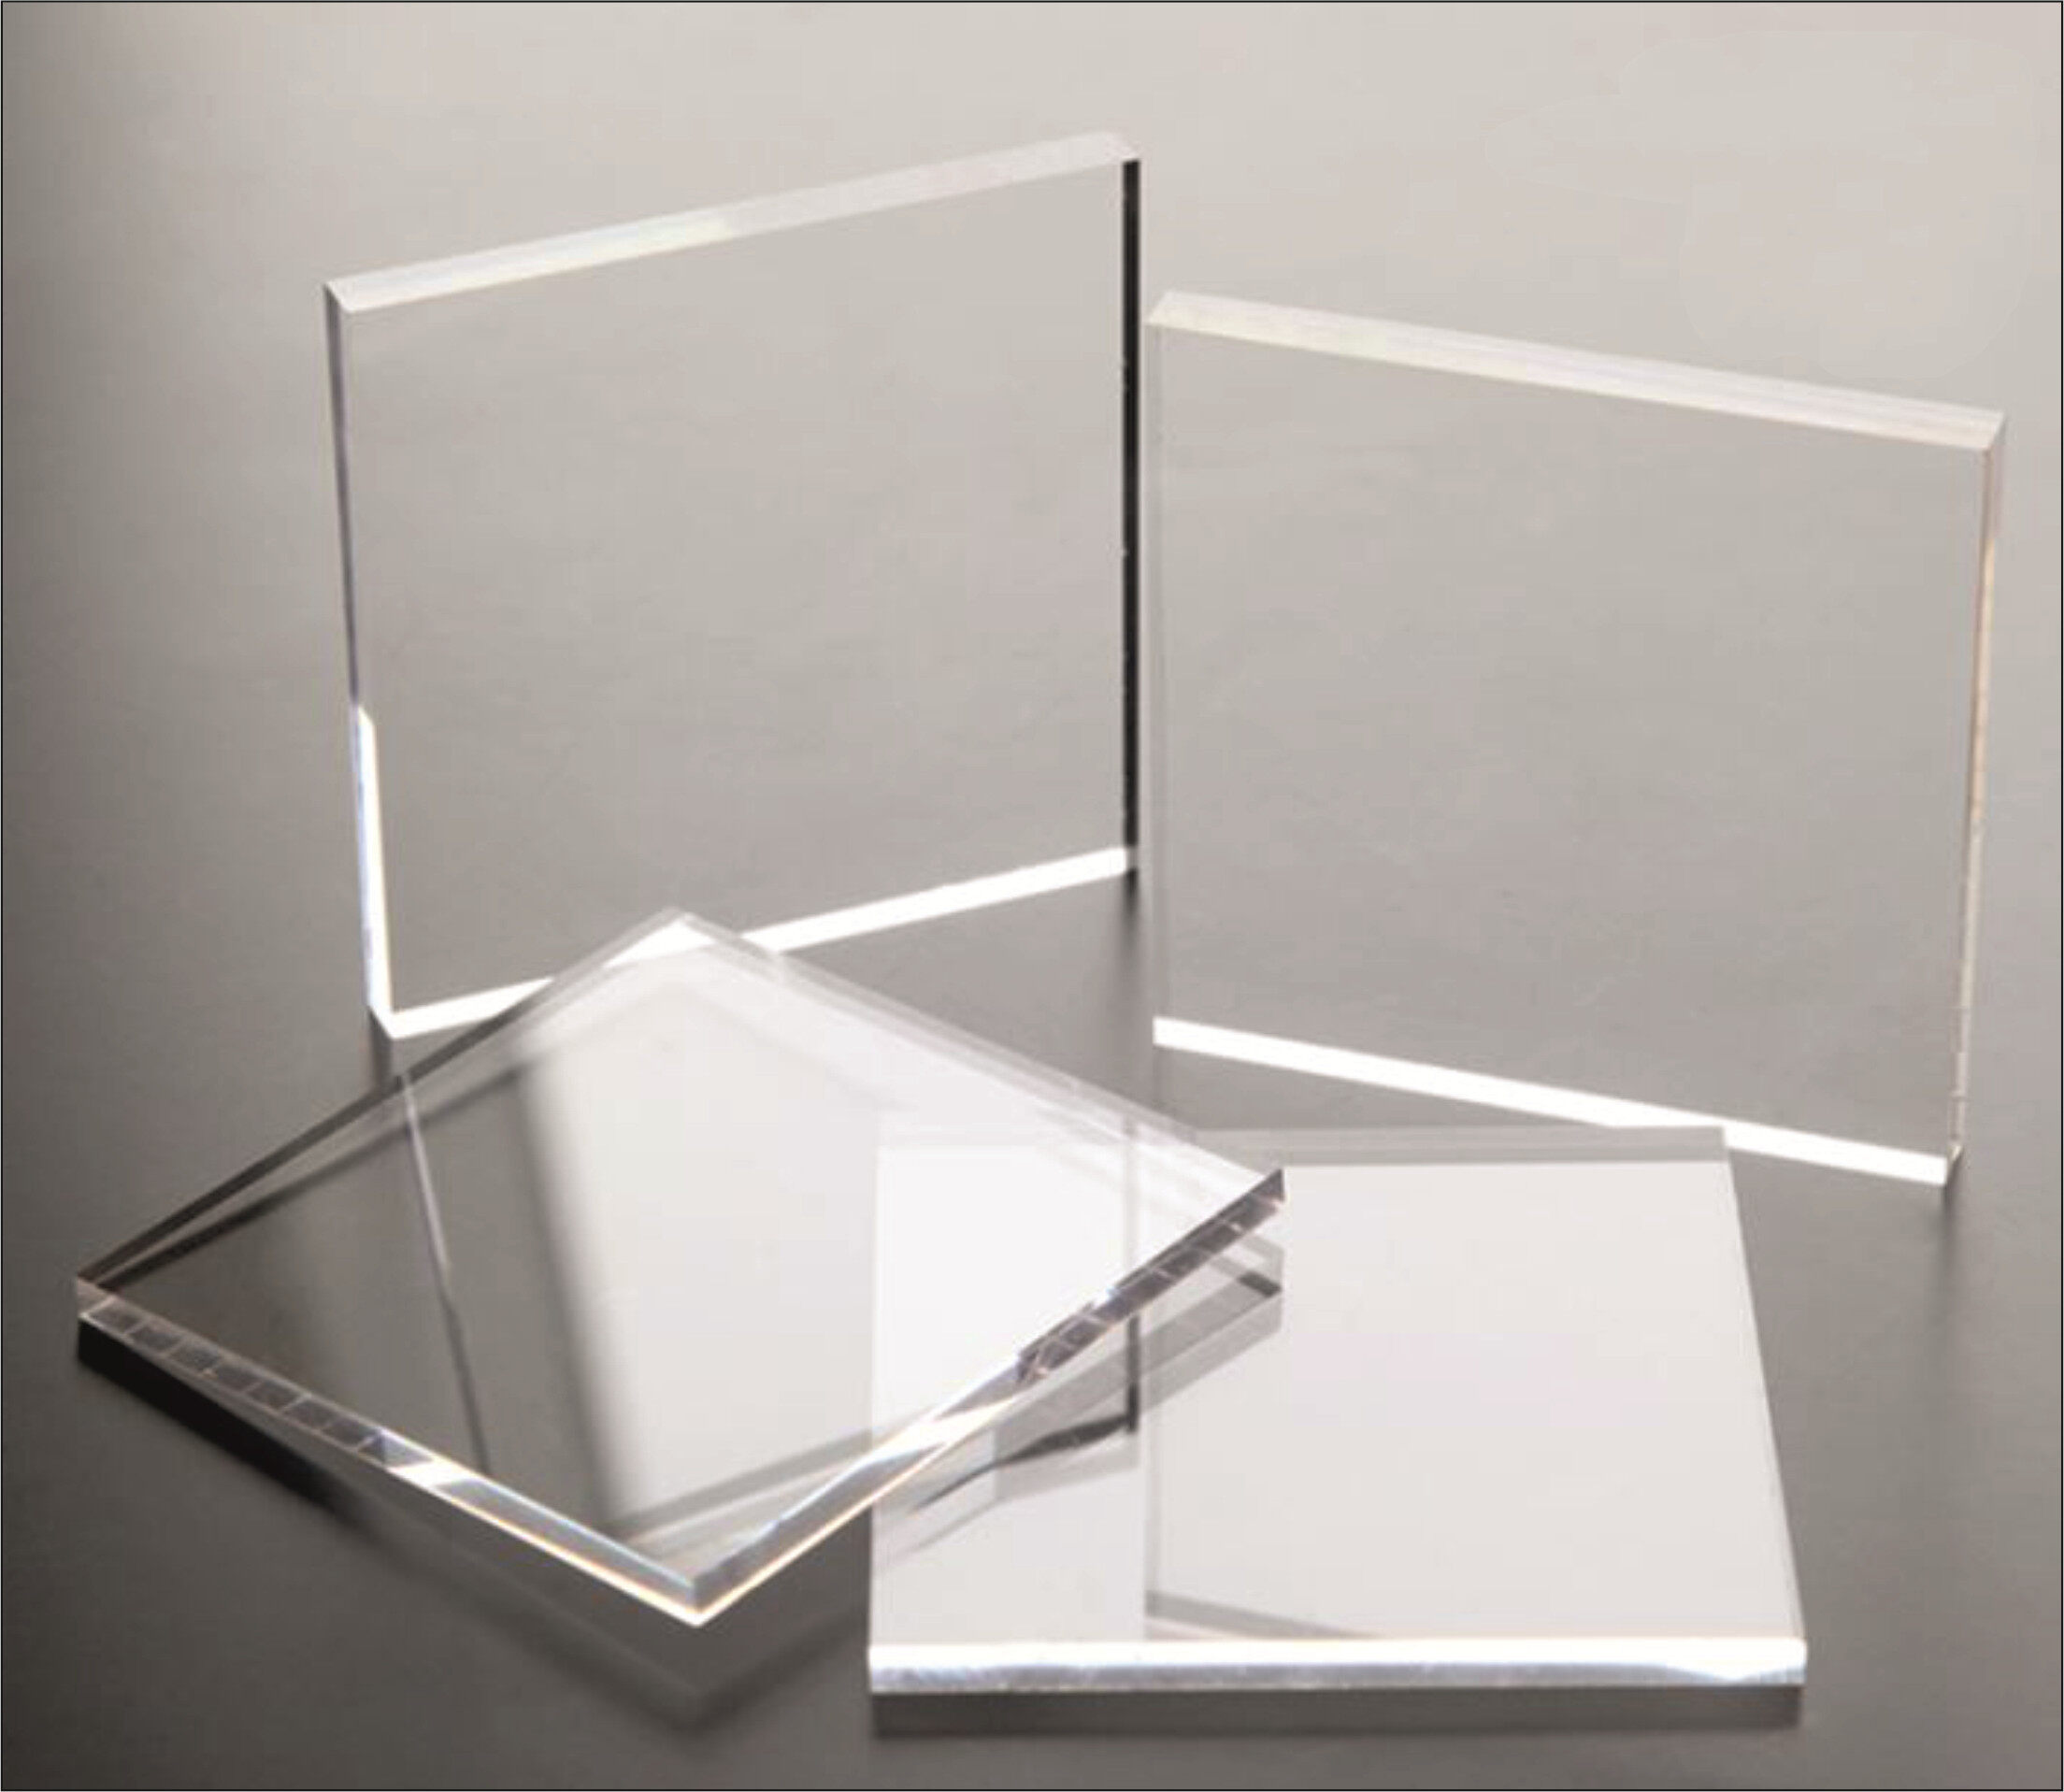 thin clear acrylic sheet, clear thin acrylic sheets